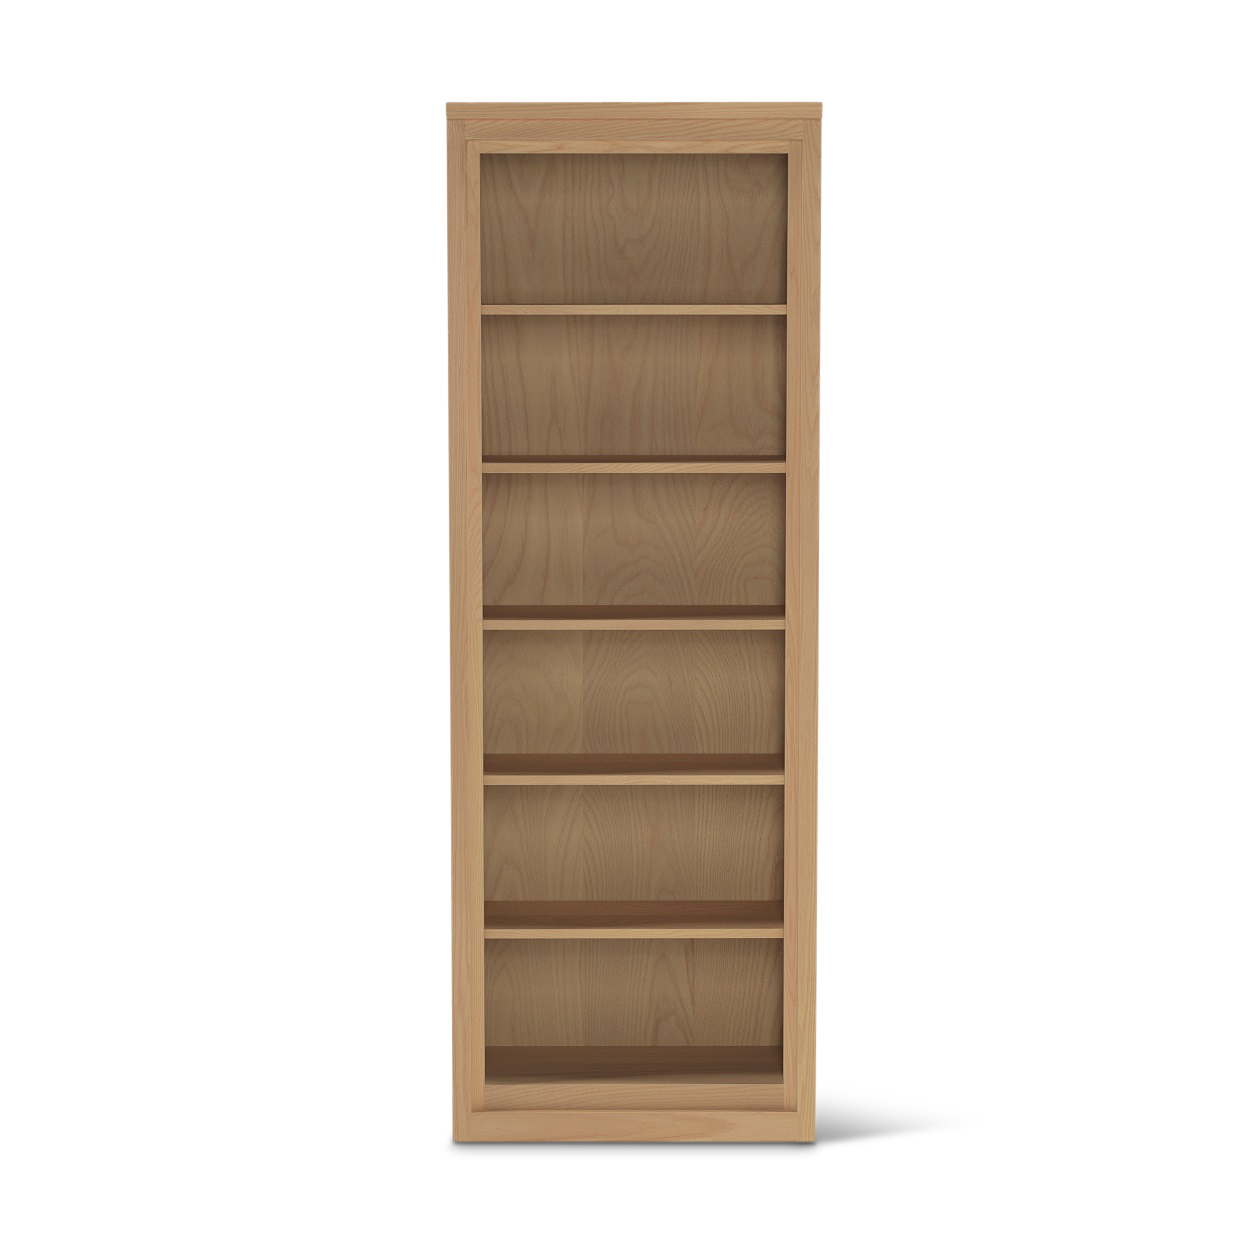 Modern ash wooden bookshelf with solid wood trim